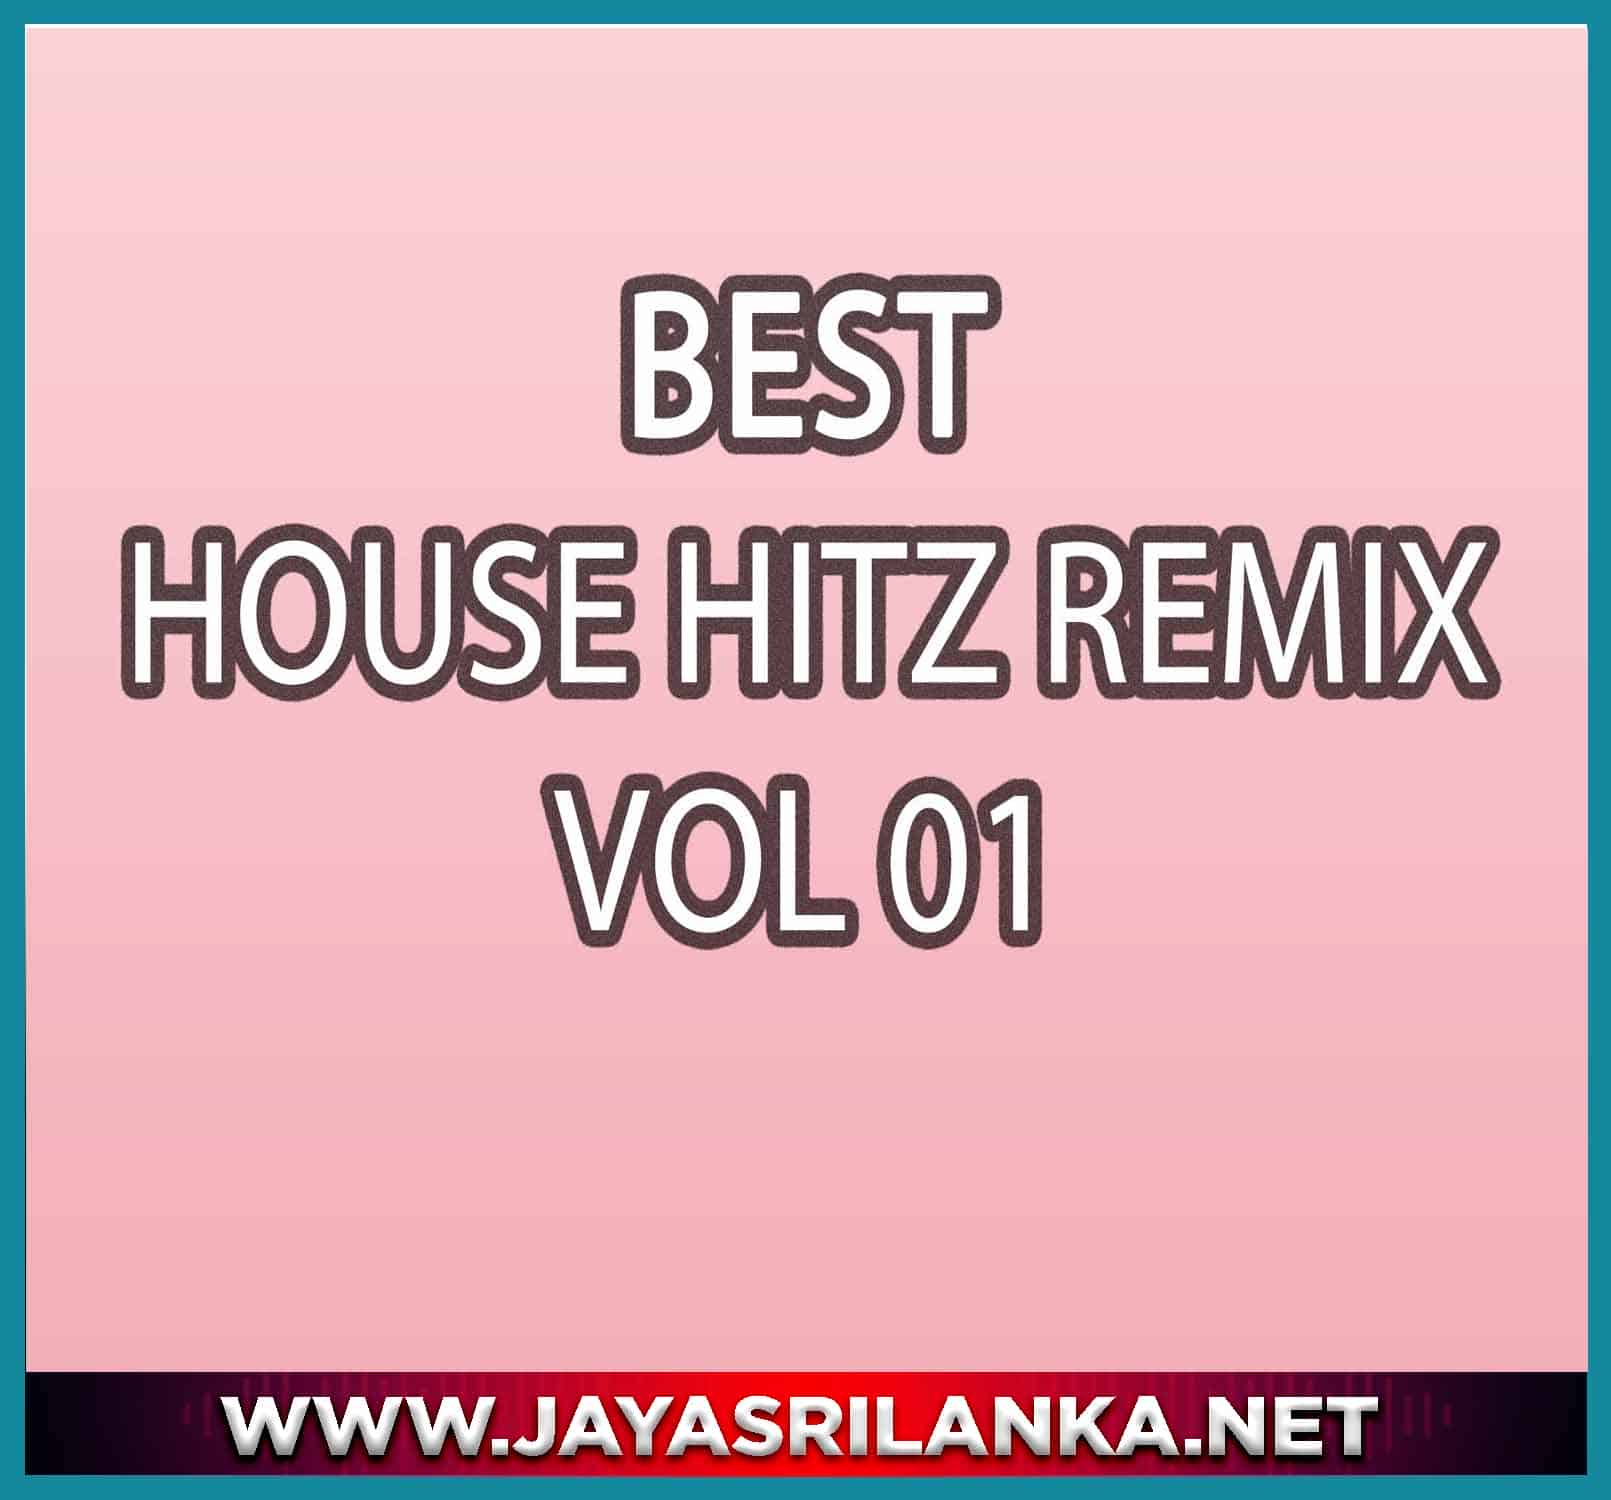 10 - Jum Bara Bar Remix - Best House Hitz Vol 01 mp3 Image